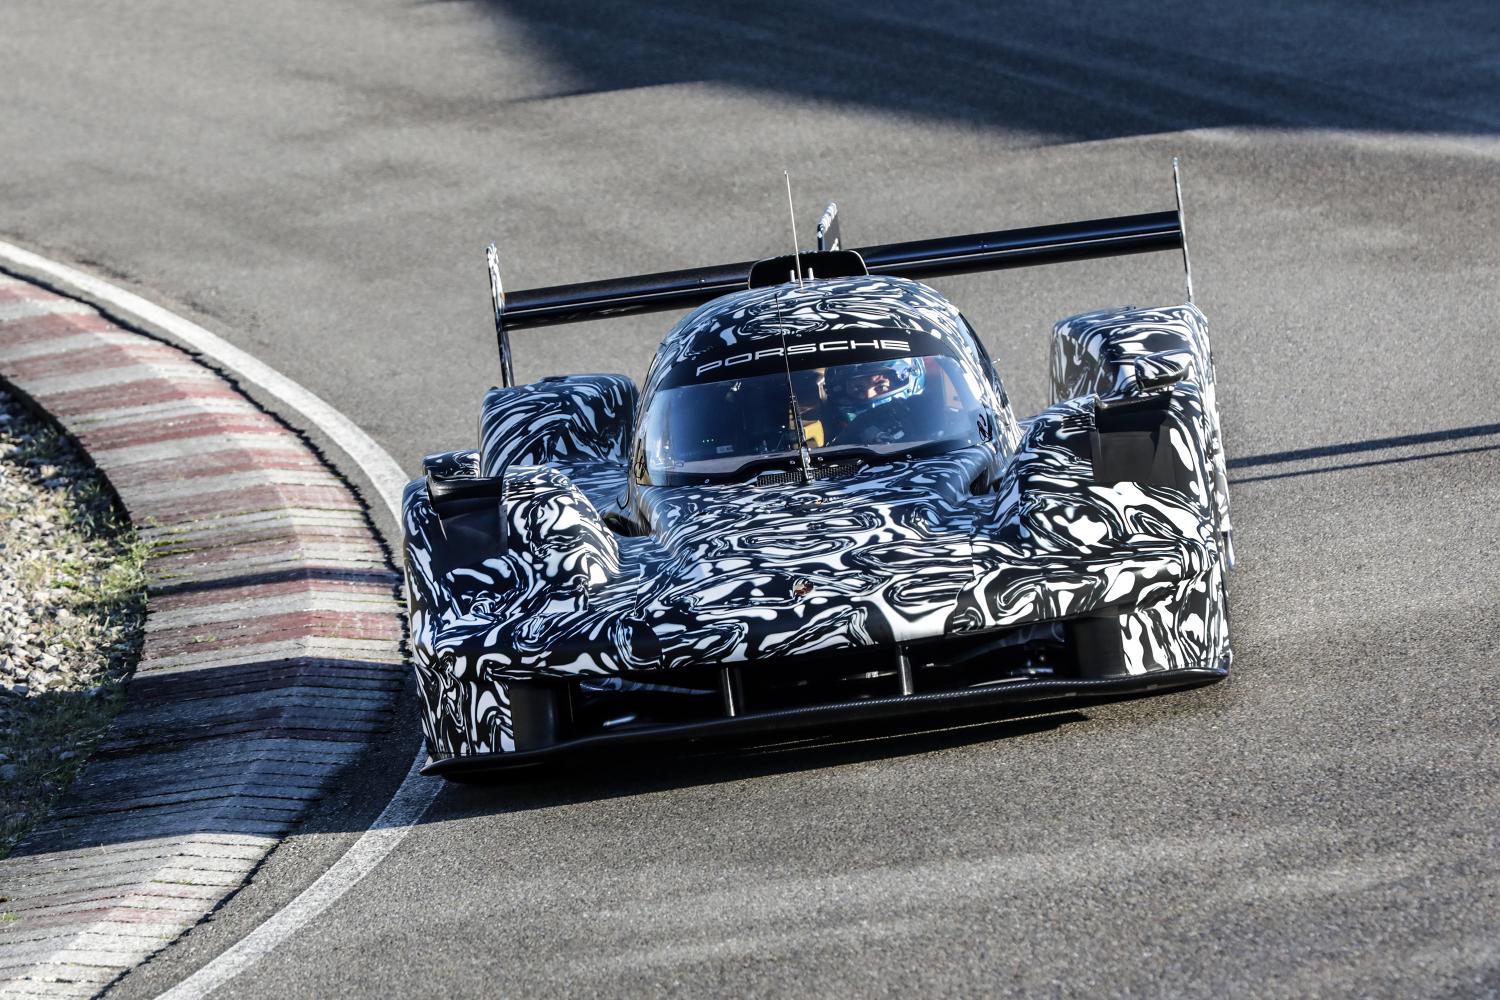 24 Hours of Le Mans Porsche's Hypercar enters active testing phase